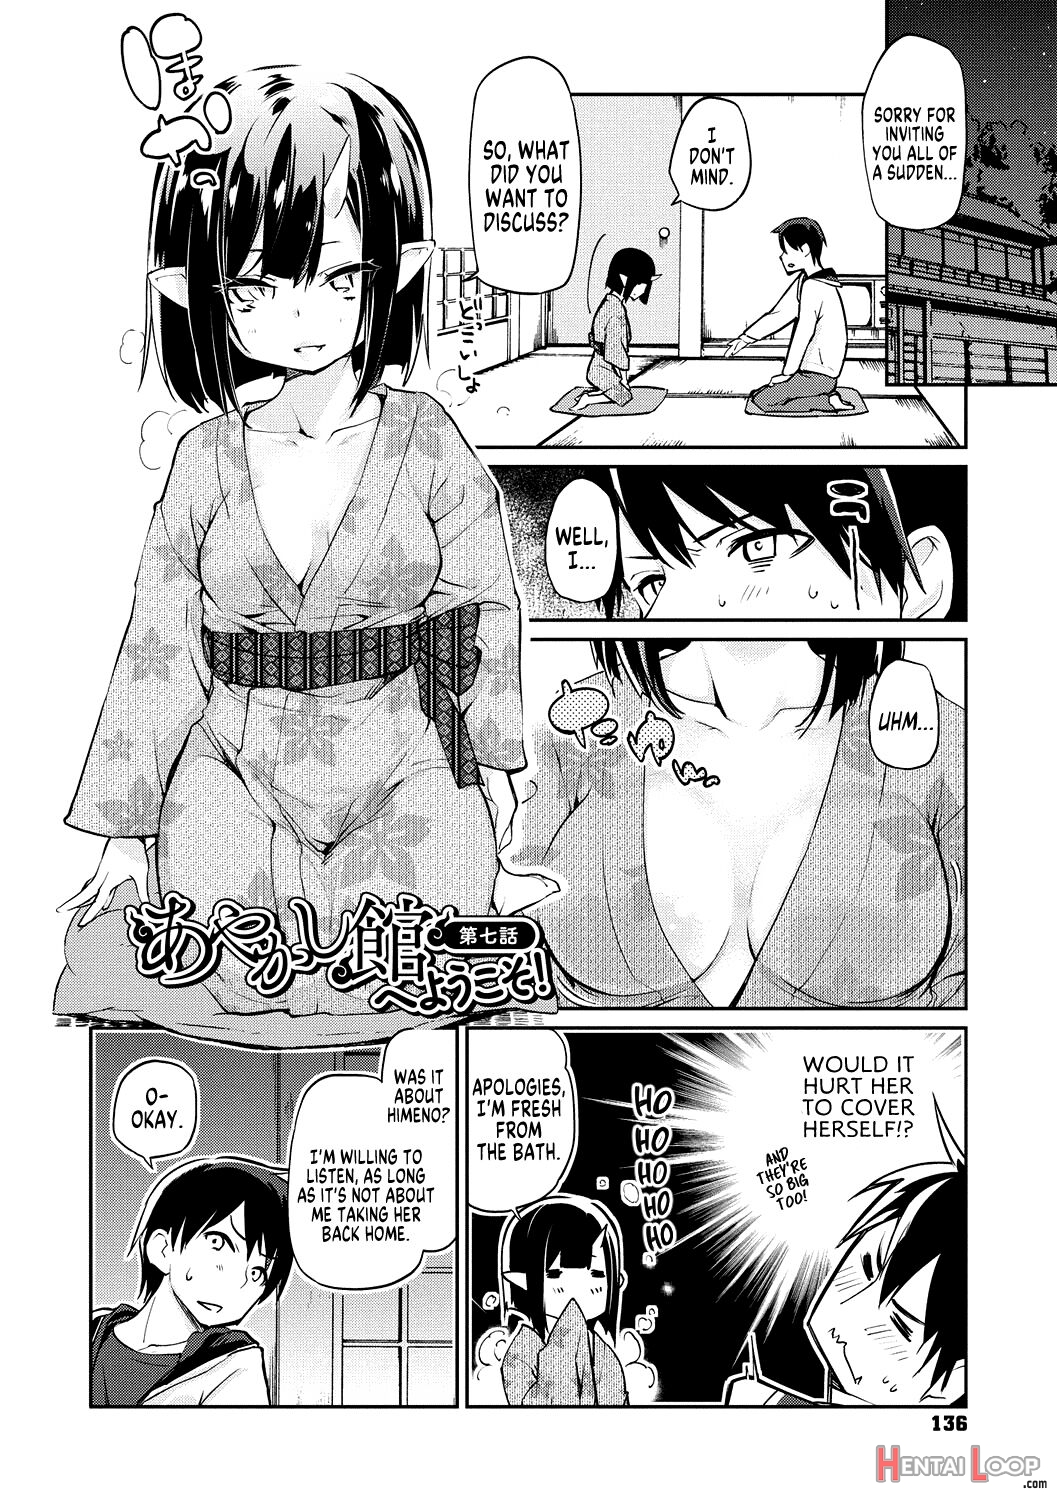 Ayakashi-kan E Youkoso! Ch. 7 page 2